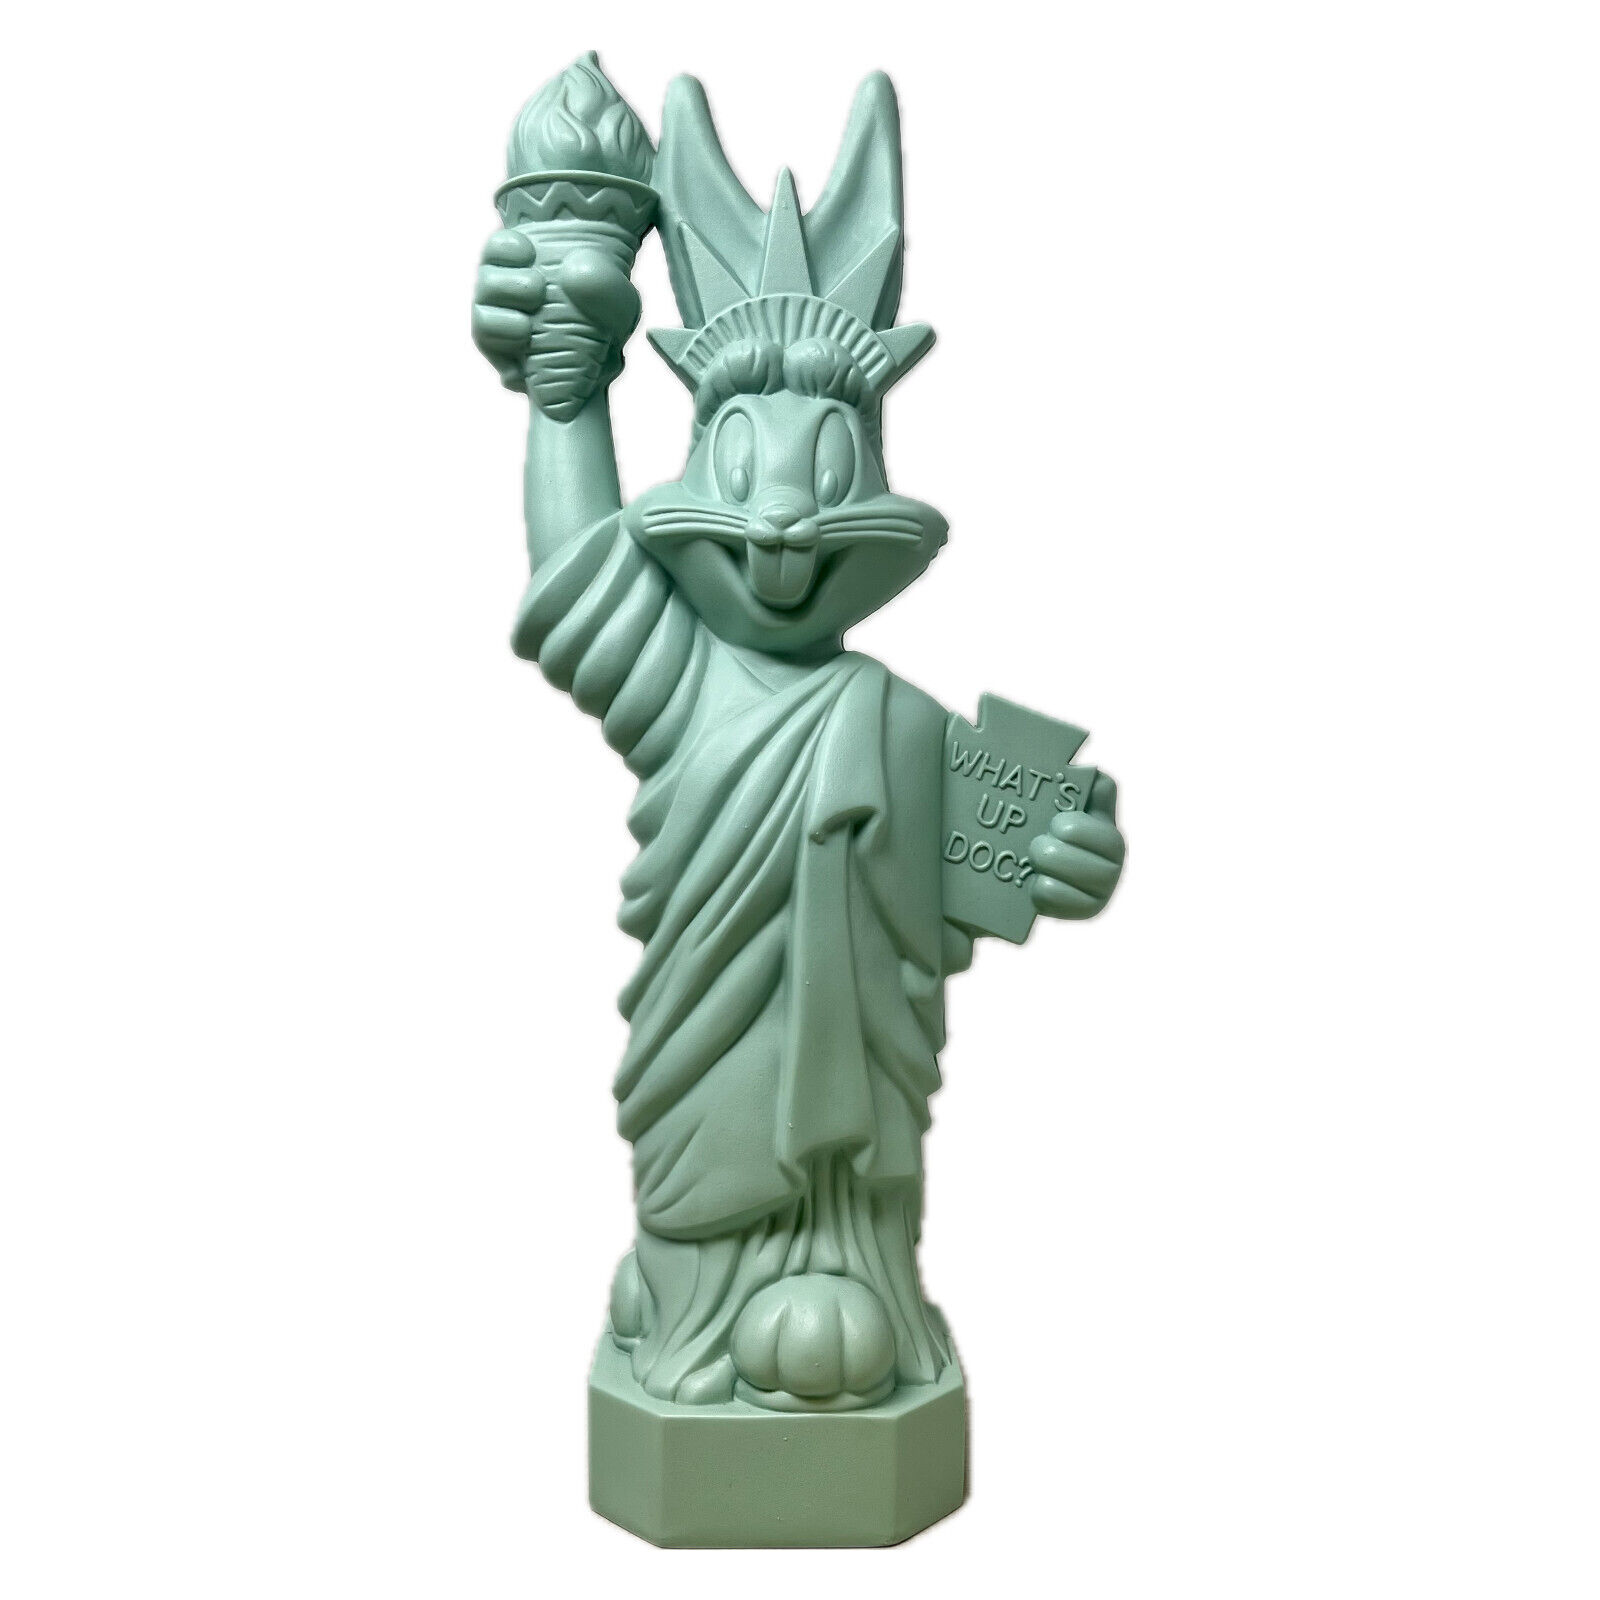 1995 Warner Bros 15.5” Bugs Bunny Statue of Liberty Coin Bank